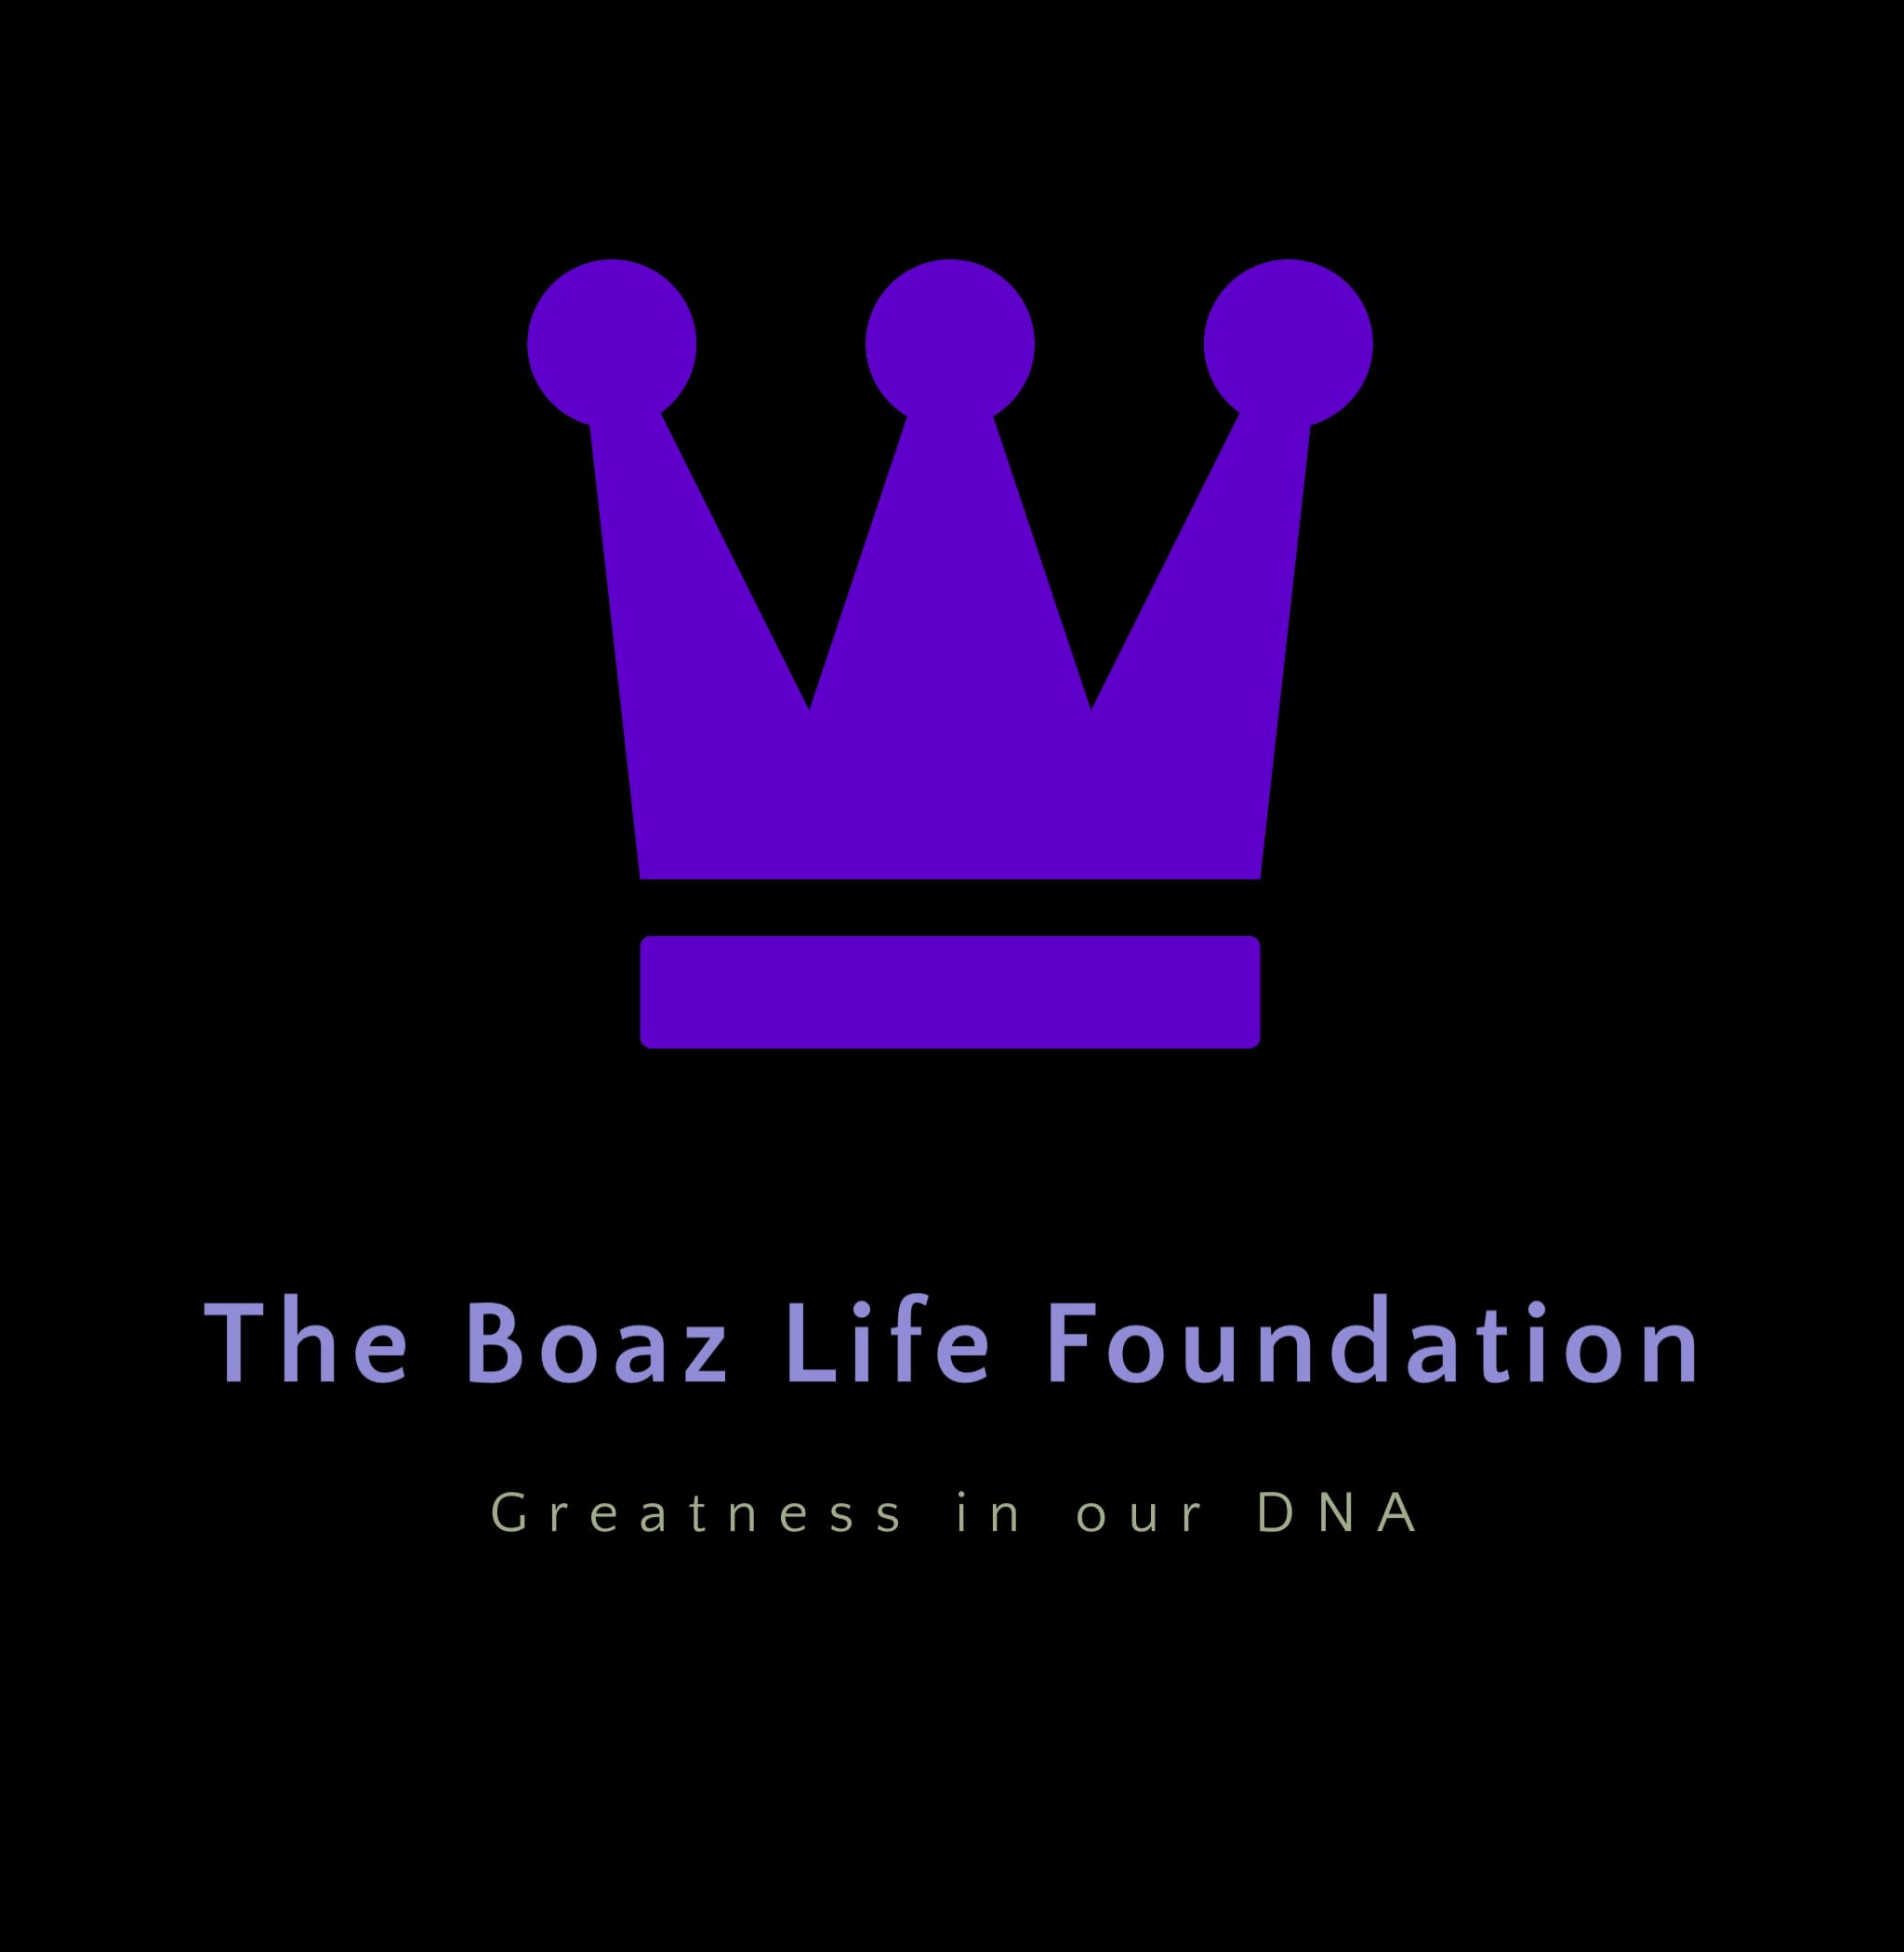 The Boaz Life Foundation